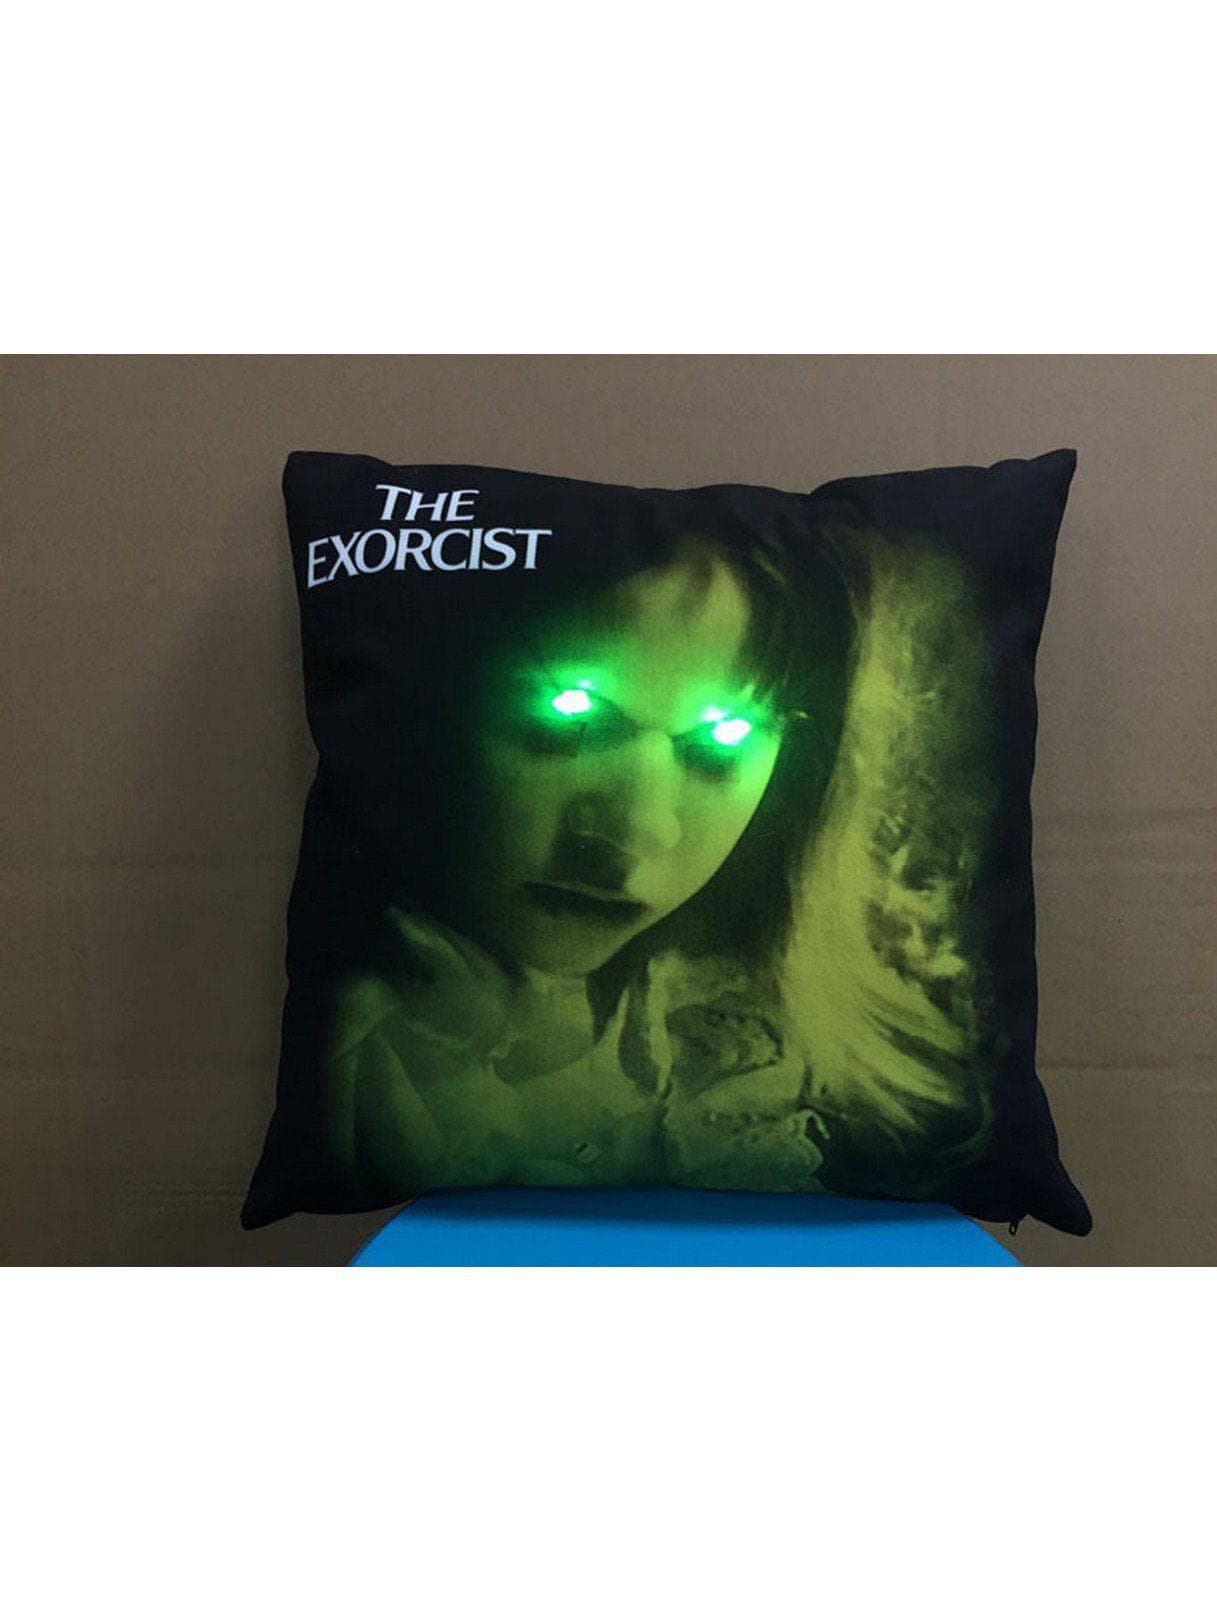 Exorcist Pillow - costumes.com